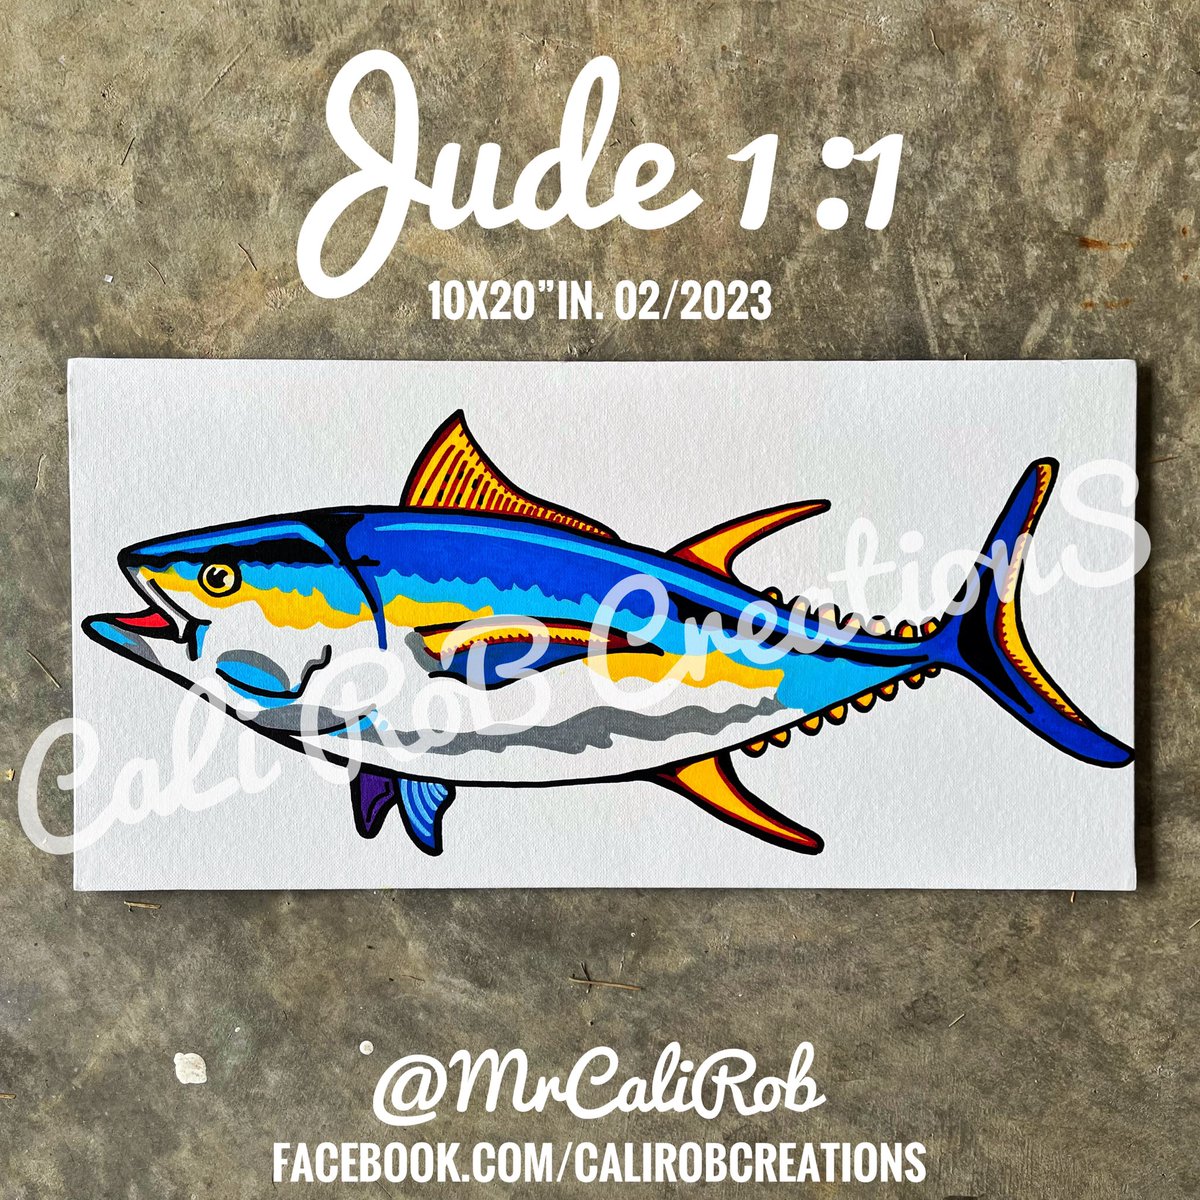 Jude 1:1 🐟🎨✨
10x20”in.
02/2023
#CaliRobCreations